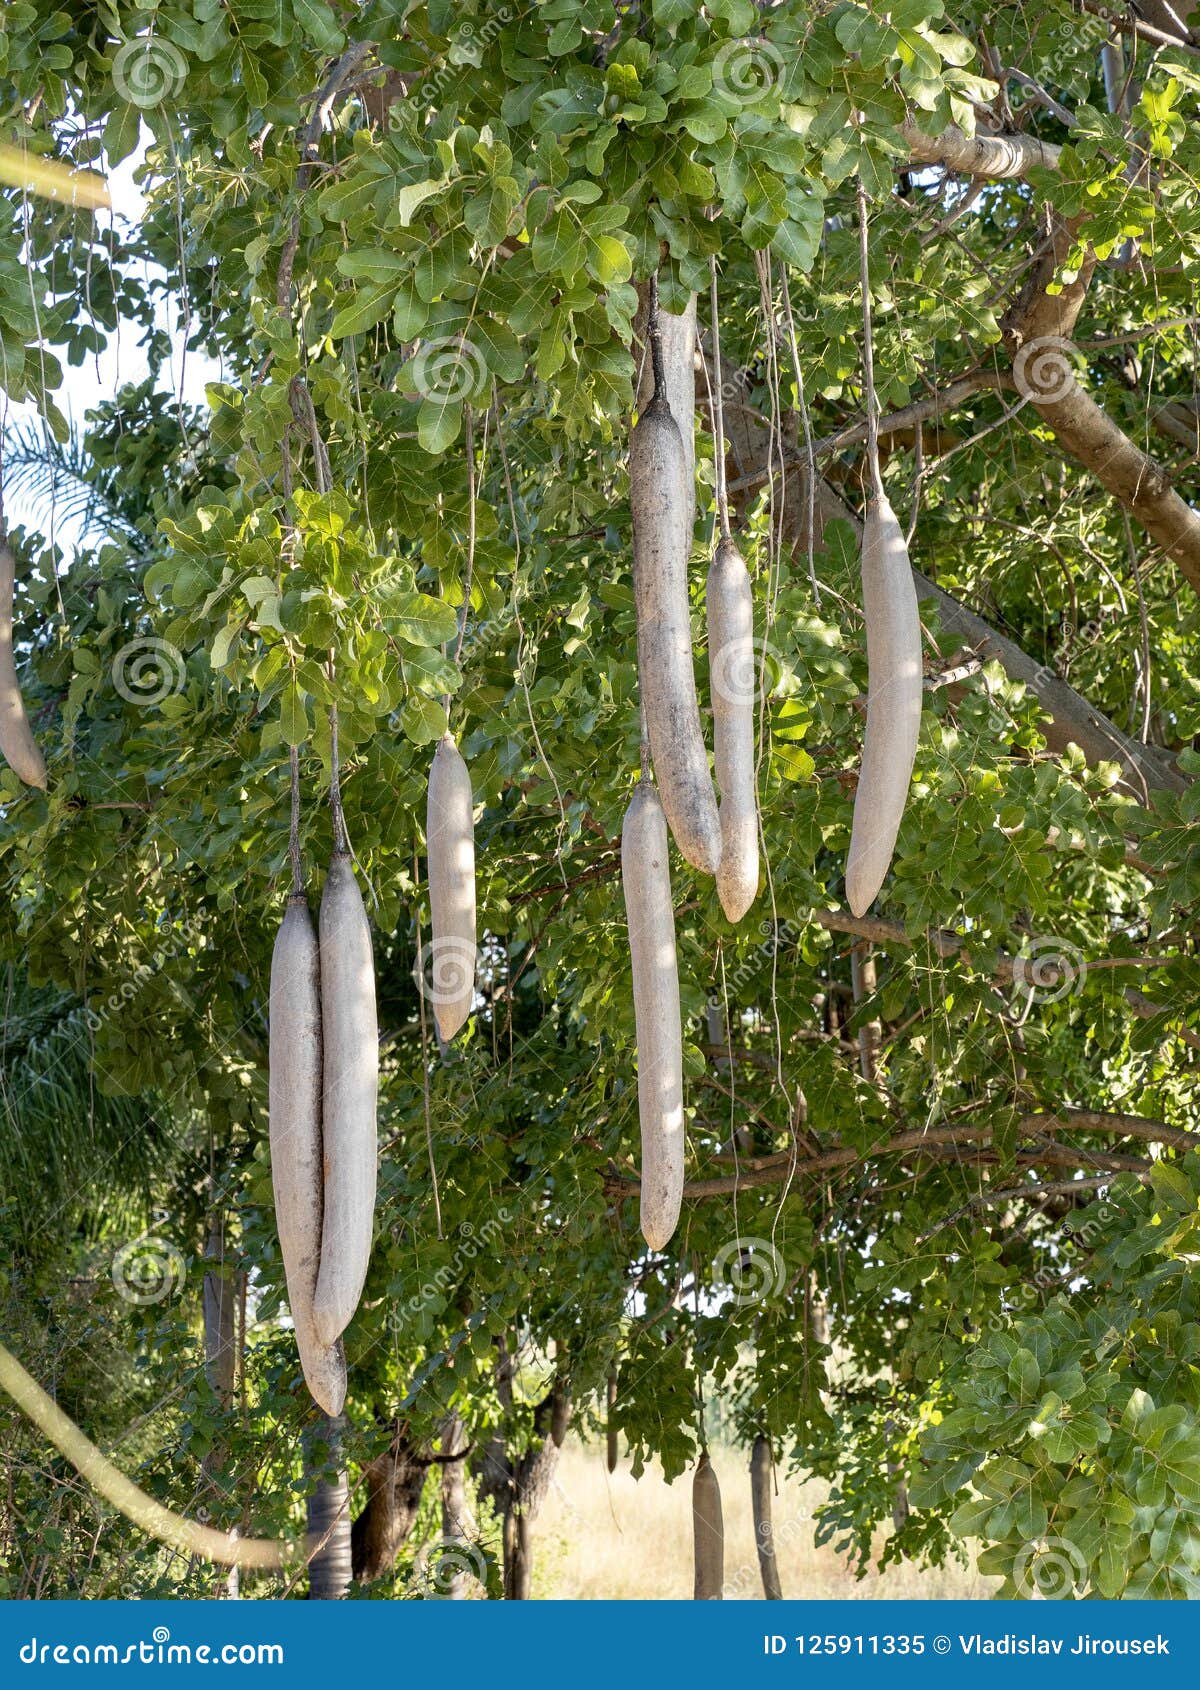 File:Arbre à saucisse - Kigelia africana 05.jpg - Wikimedia Commons